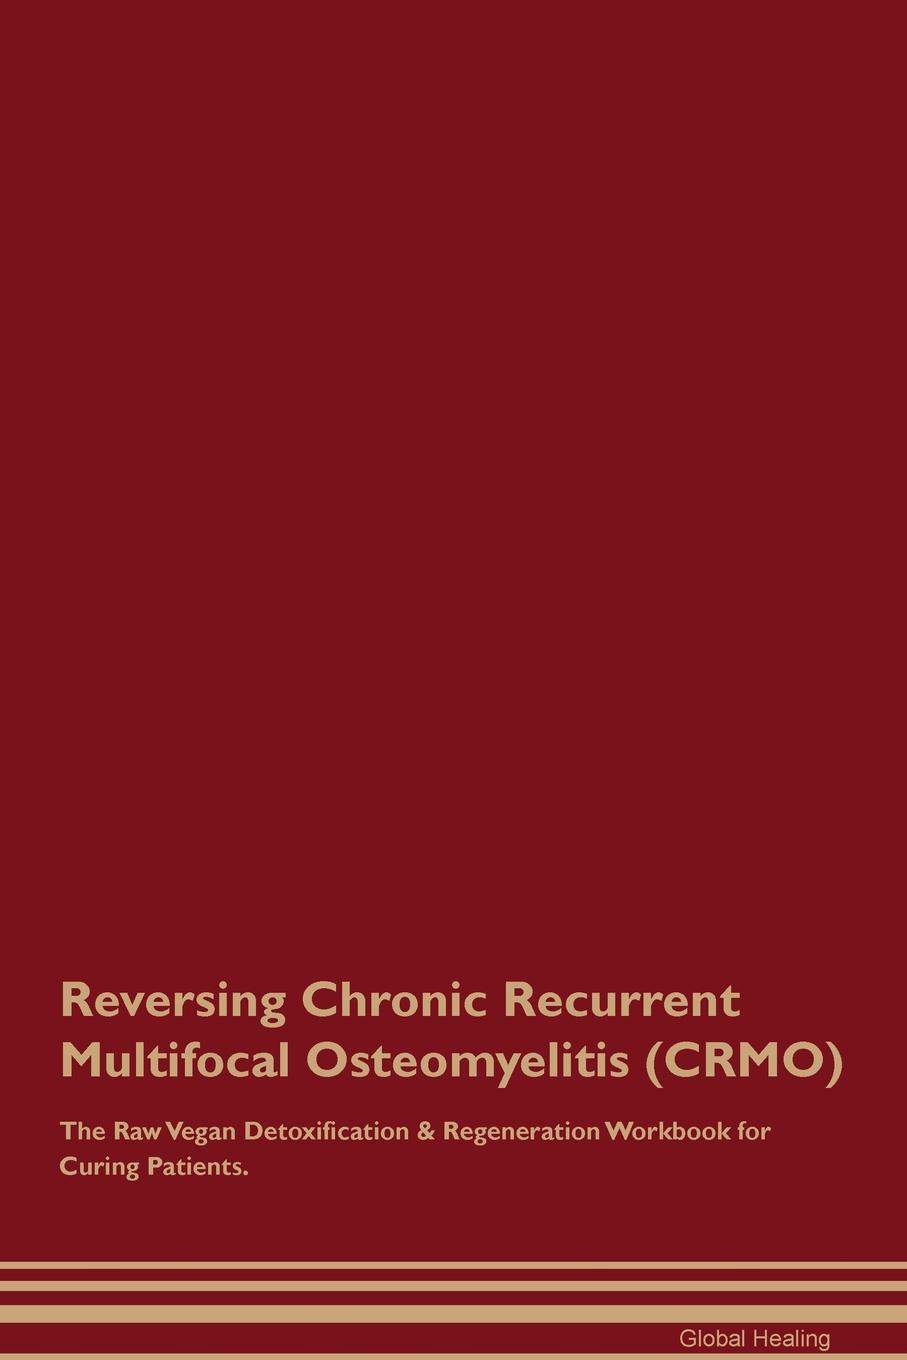 Reversing Chronic Recurrent Multifocal Osteomyelitis (CRMO) The Raw Vegan Detoxification & Regeneration Workbook for Curing Patients